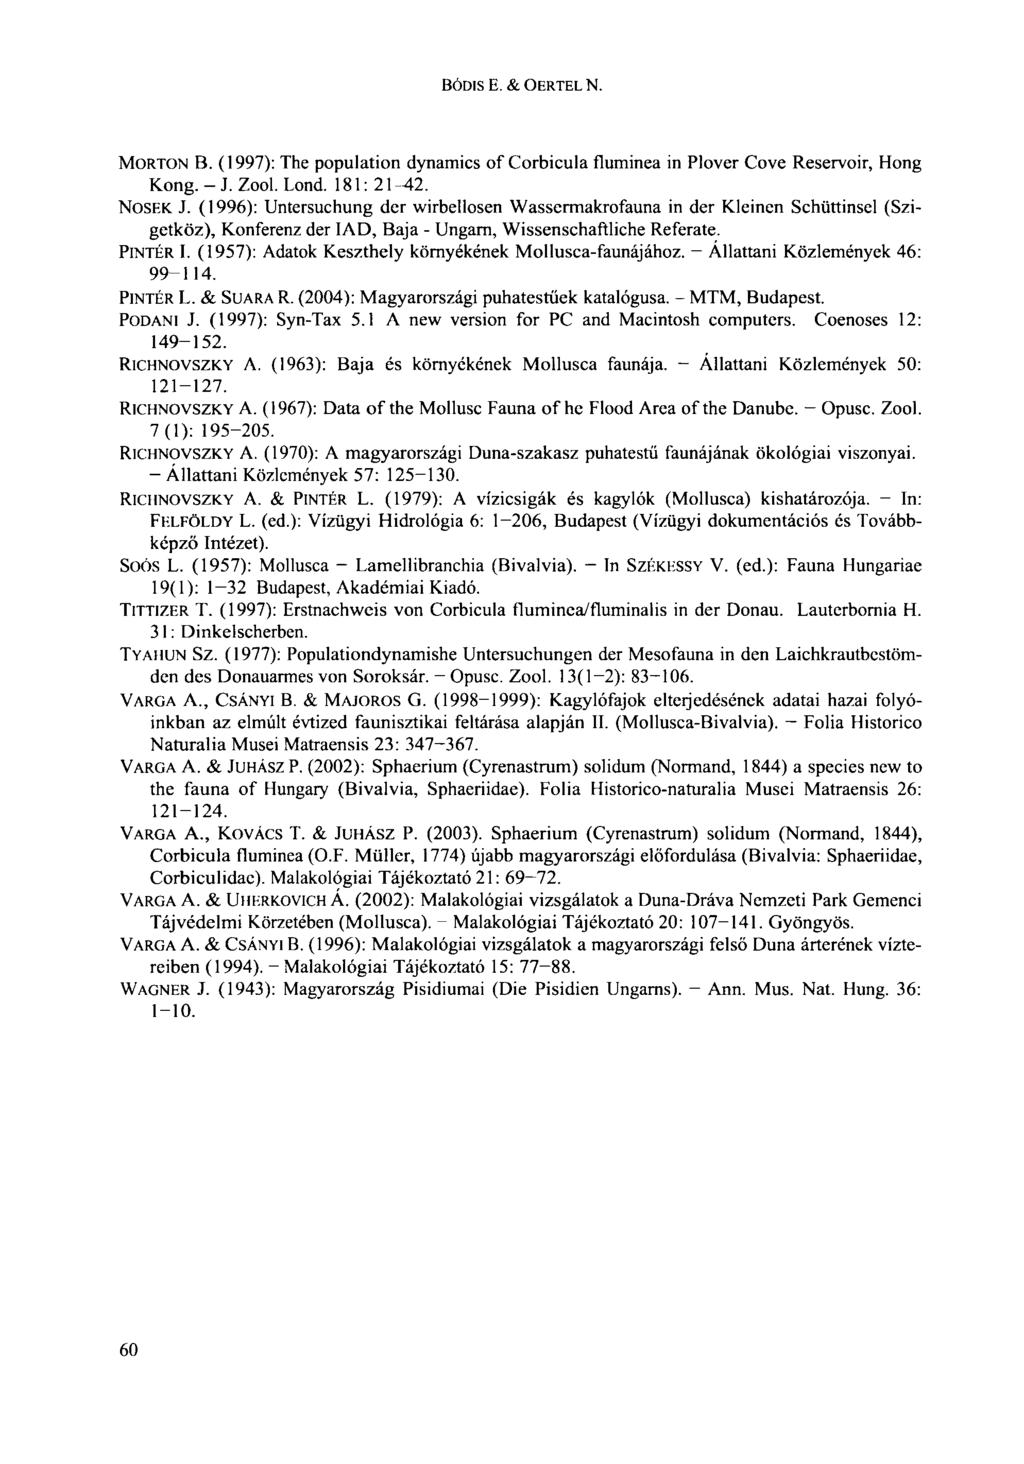 BÓDIS E. & OERTEL N. MORTON В. (1997): The population dynamics of Corbicula fluminea in Plover Cove Reservoir, Hong Kong. - J. Zool. Lond. 181:21-42. NOSEK J.